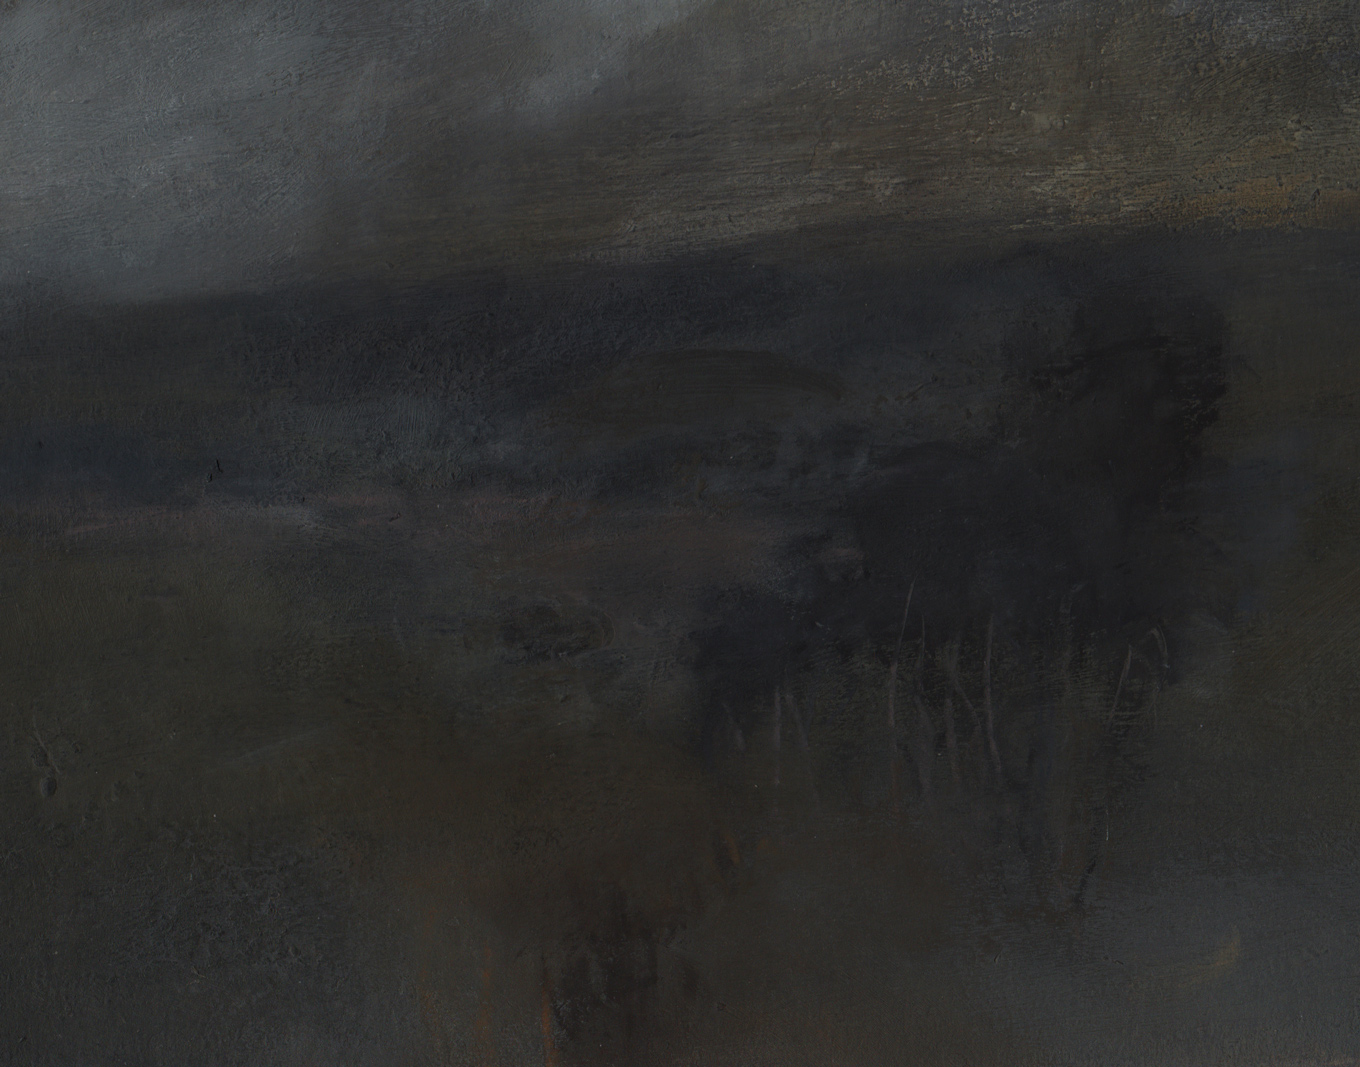 Nicholas Herbert, British Artist - Landscape L954, Sharpenhoe Series, The Sundon Hills Escarpment, The Chiltern Hills, contemporary mixed media painting